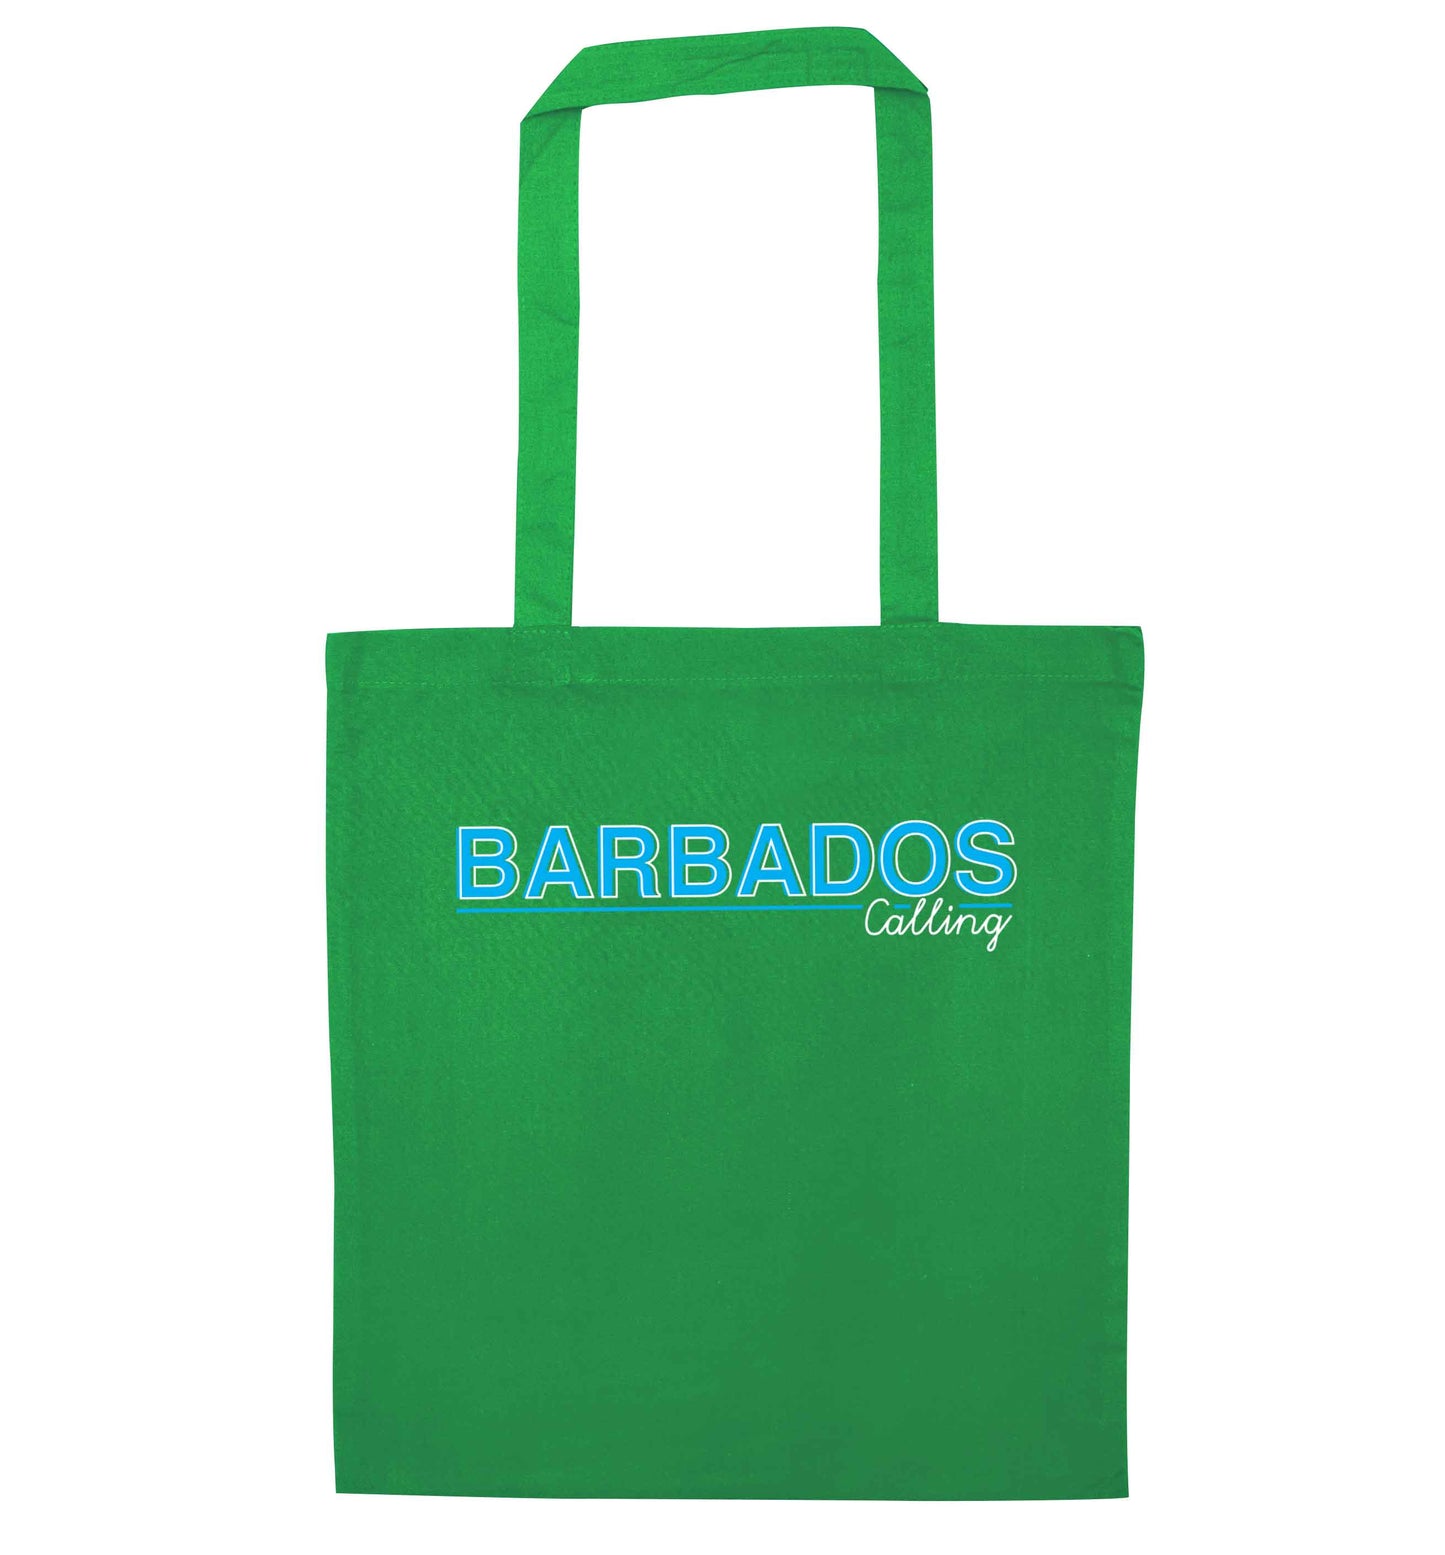 Barbados calling green tote bag